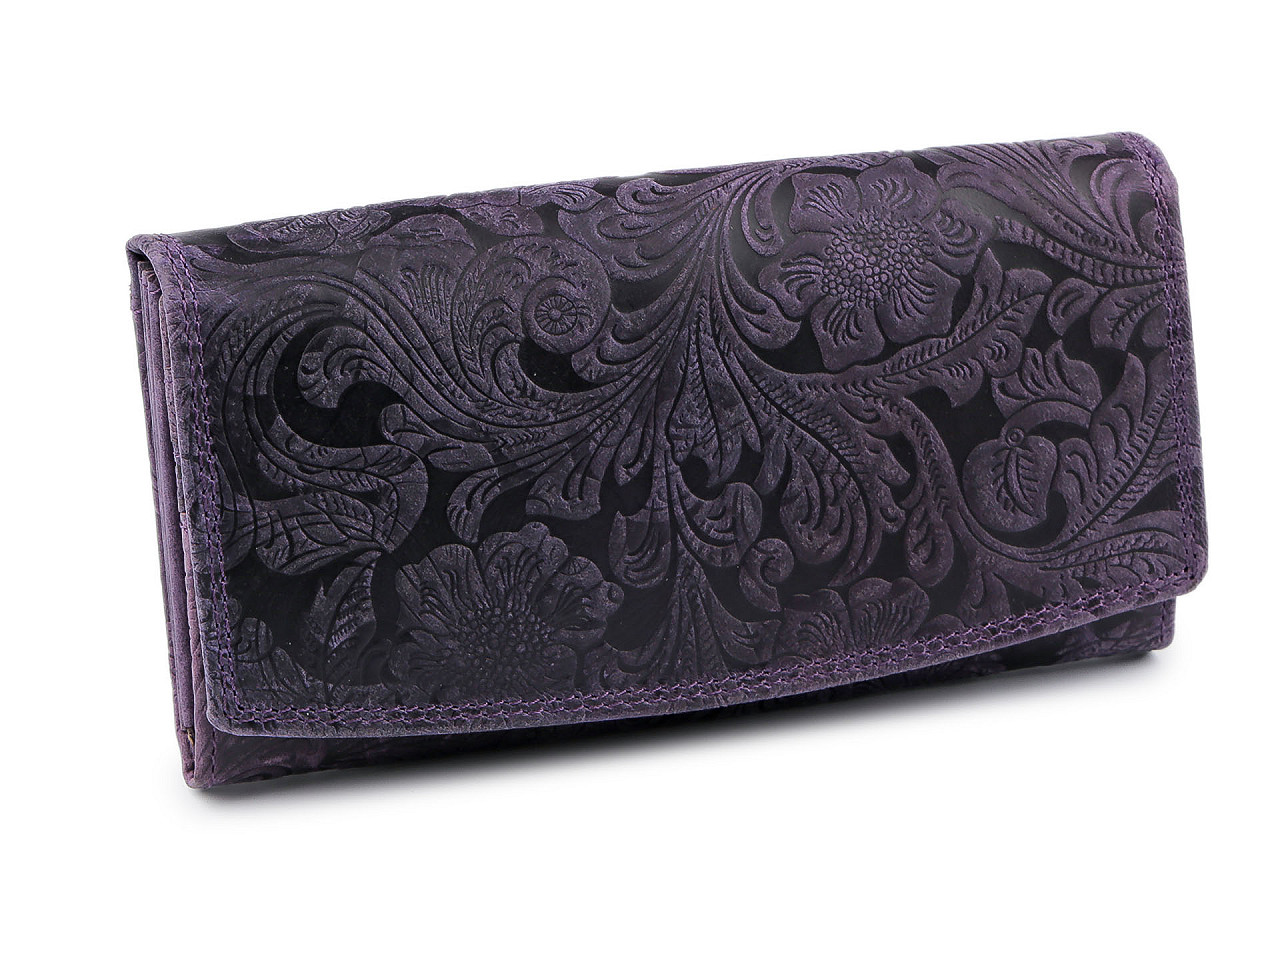 Damen-Geldbörse aus Leder, rosa, Ornamente, 9,5 x 18 cm, dunkelviolett, 1 Stück